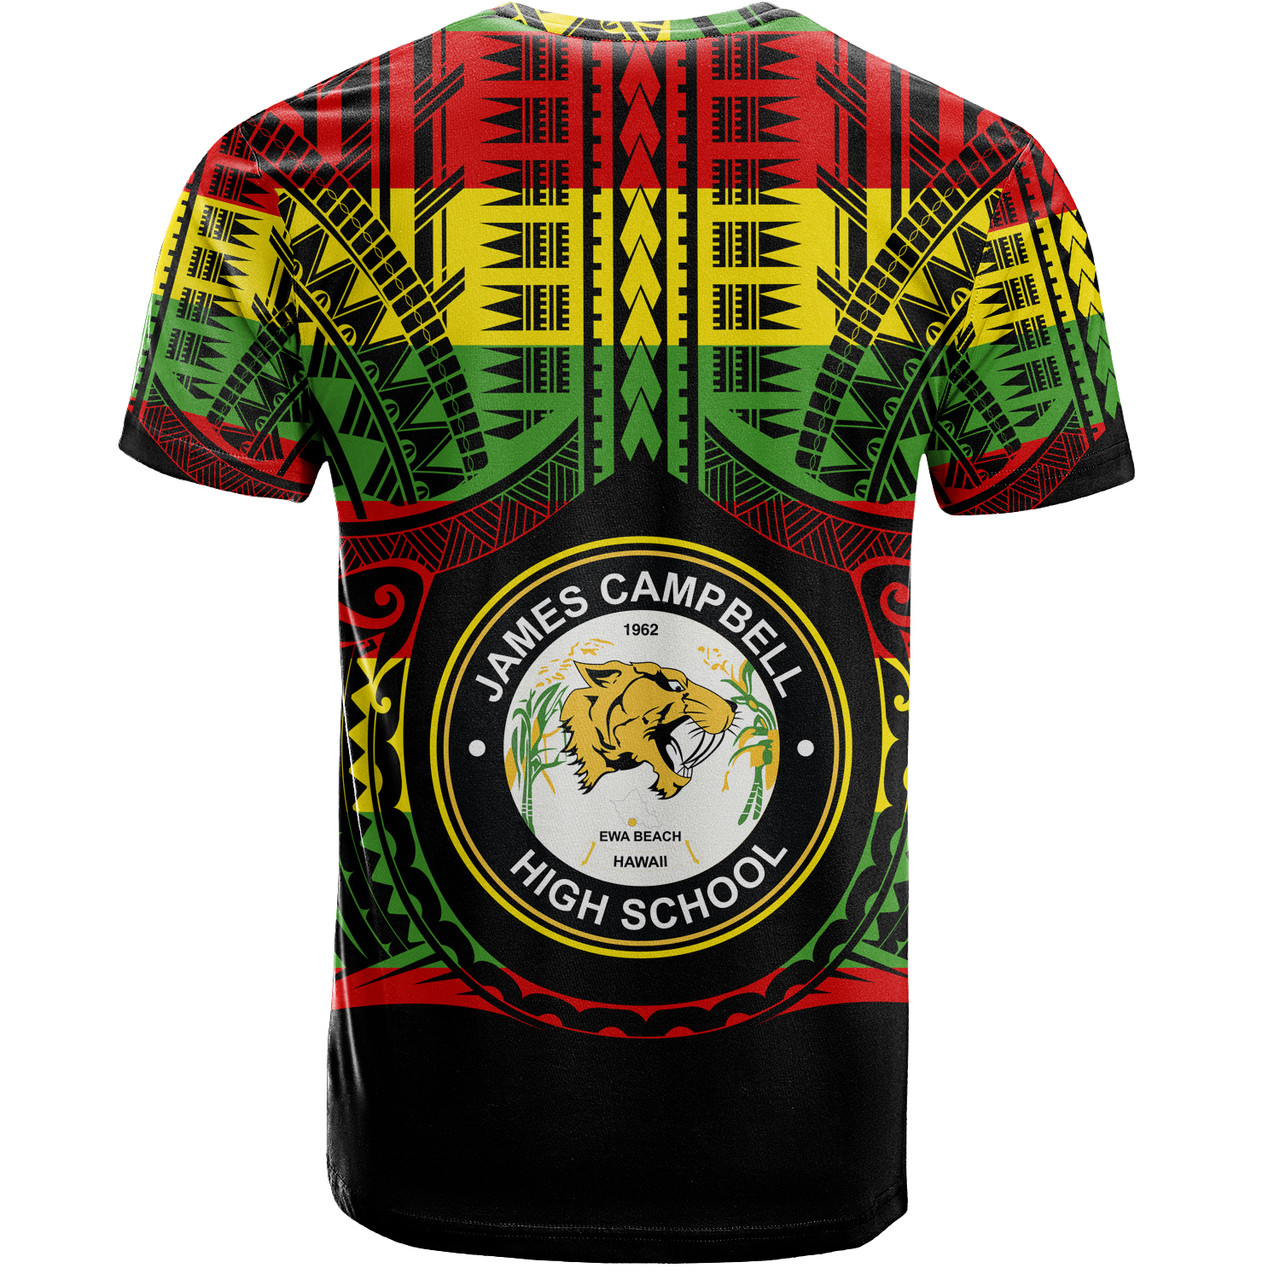 Hawaii T-Shirt James Campbell High School Reggae Color Polynesian